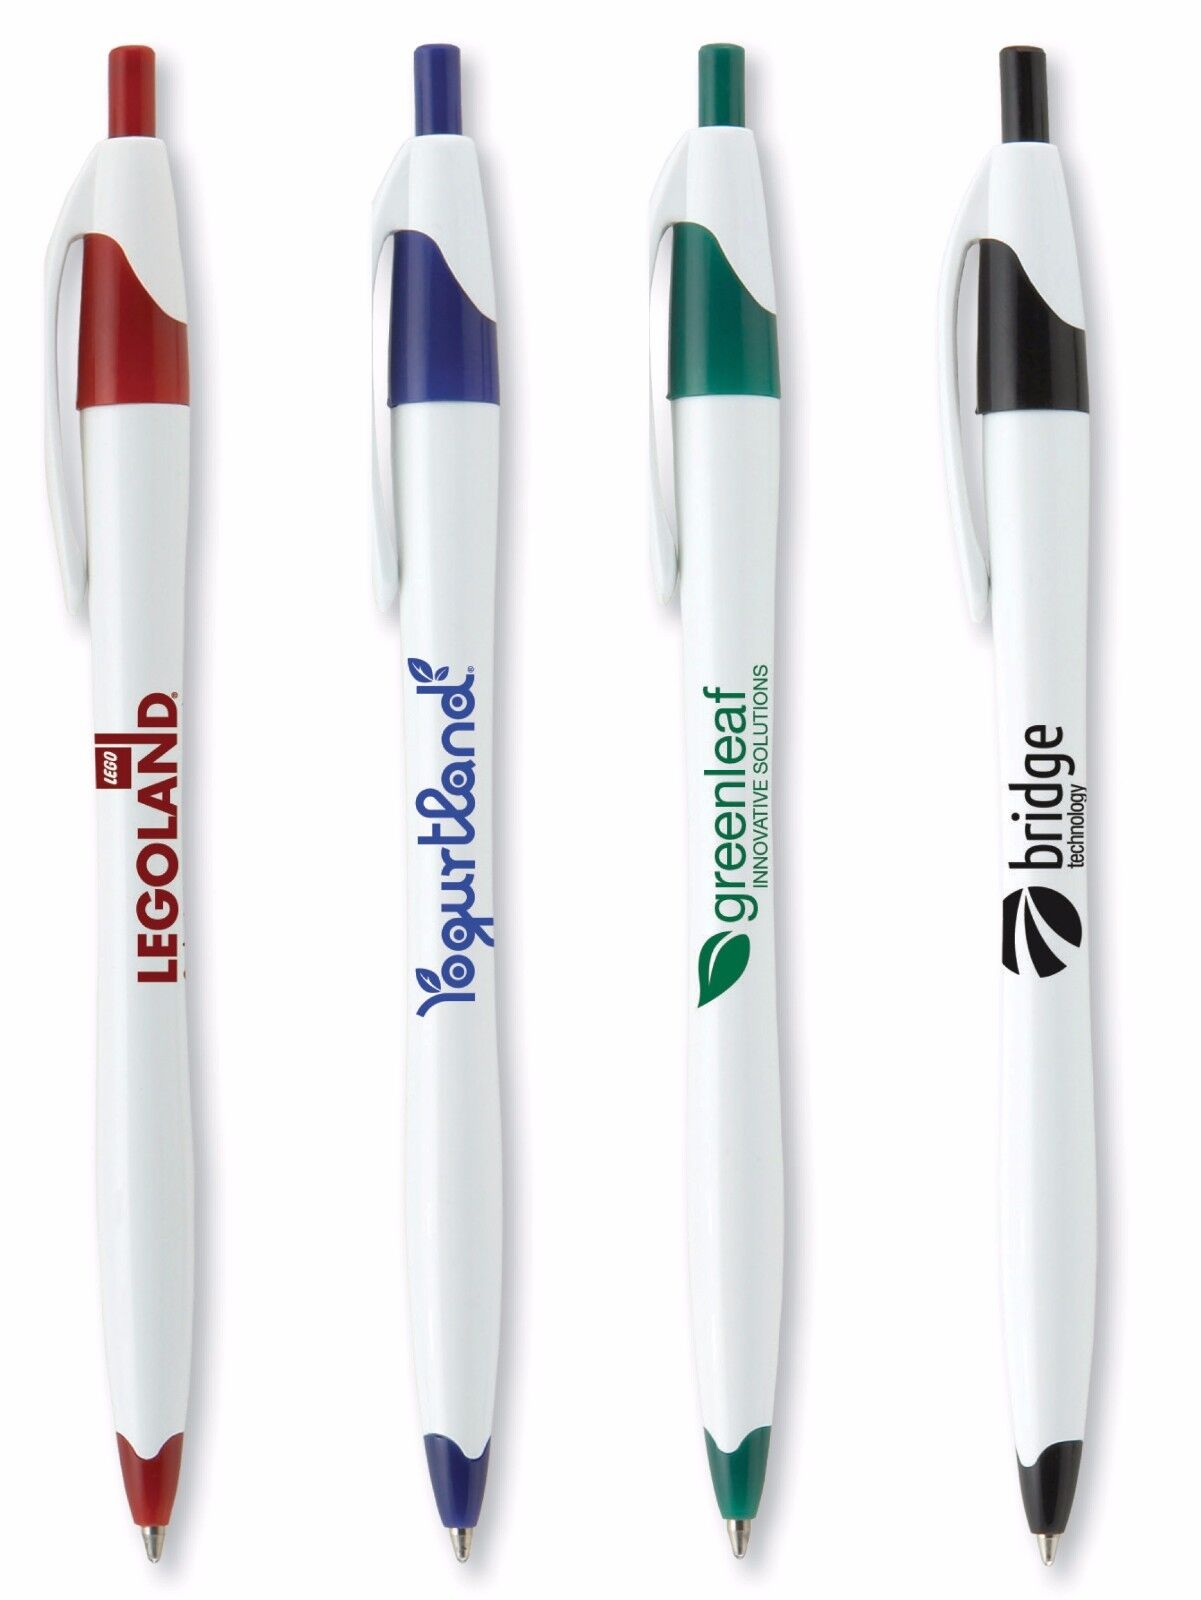 300- Promotional Pens - Personalized Custom Imprinted. Без бренда - фотография #3